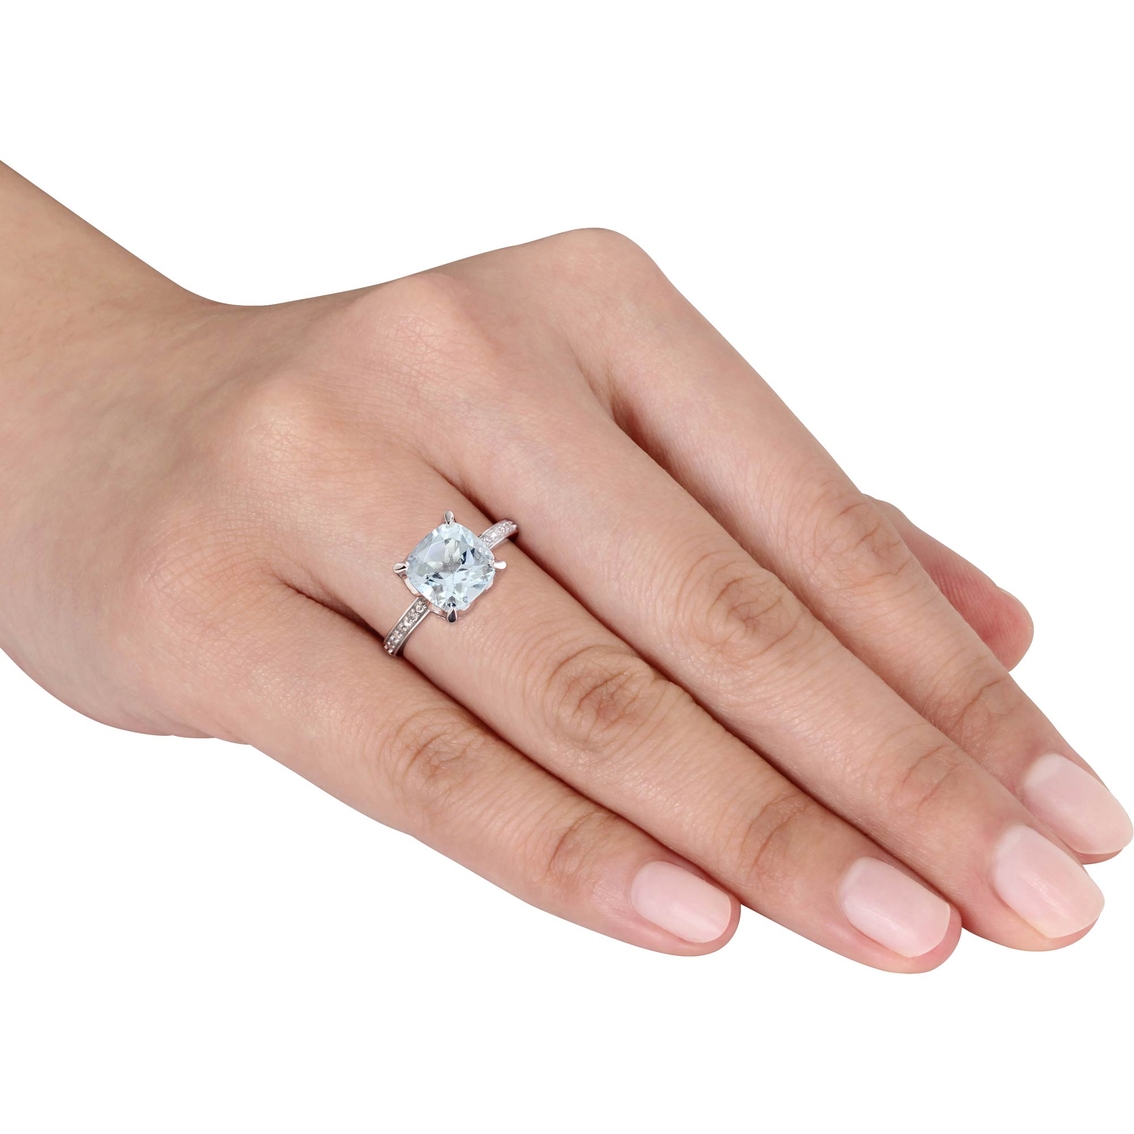 Sofia B. Aquamarine and Diamond Accent Ring in 10K White Gold - Image 3 of 3